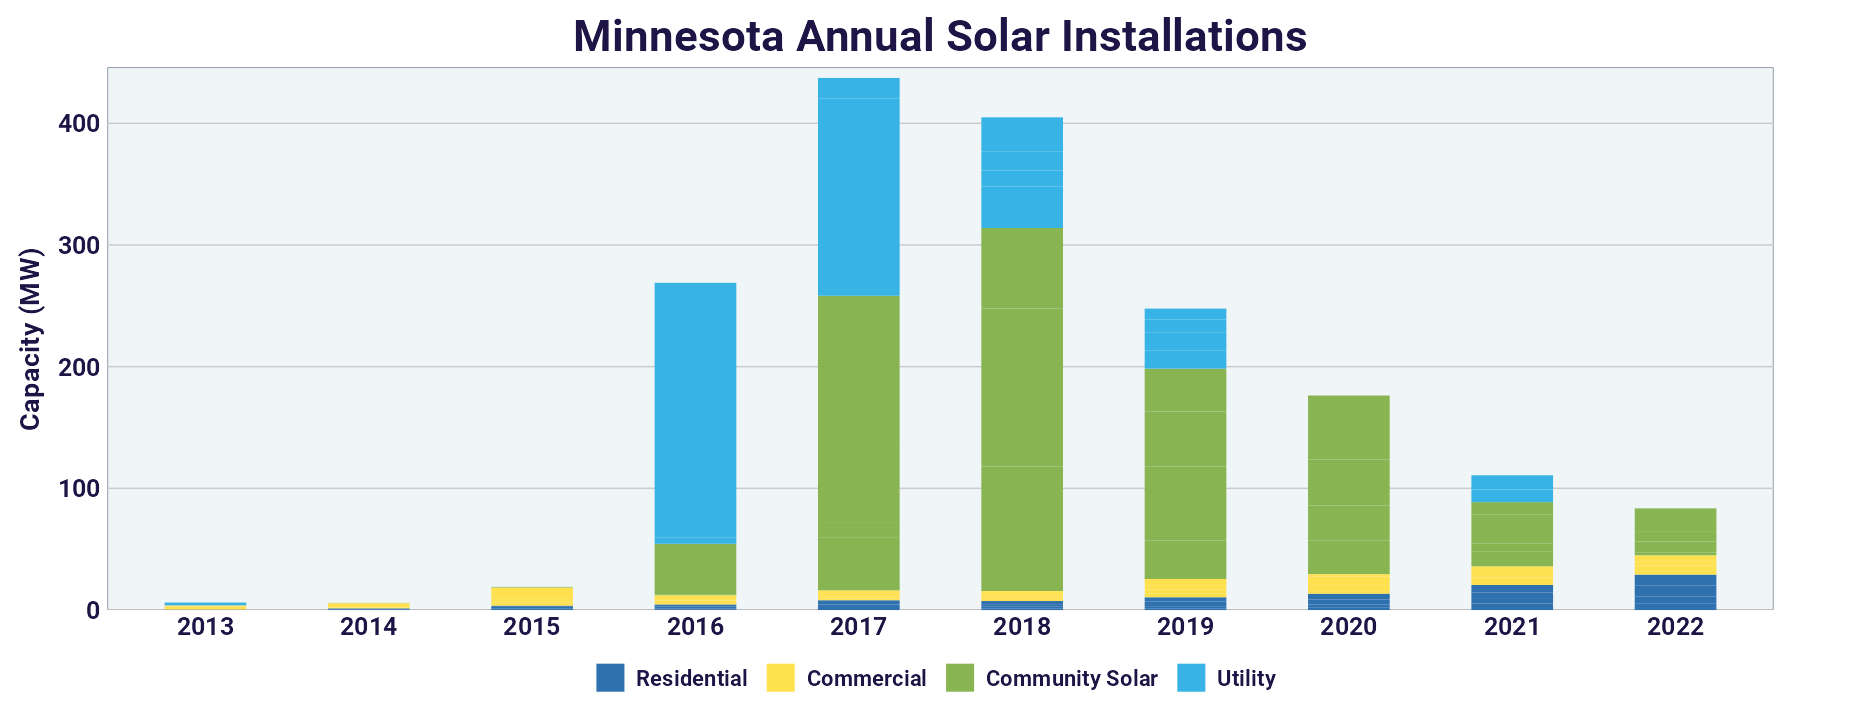 Minnesota Annual Solar Installations